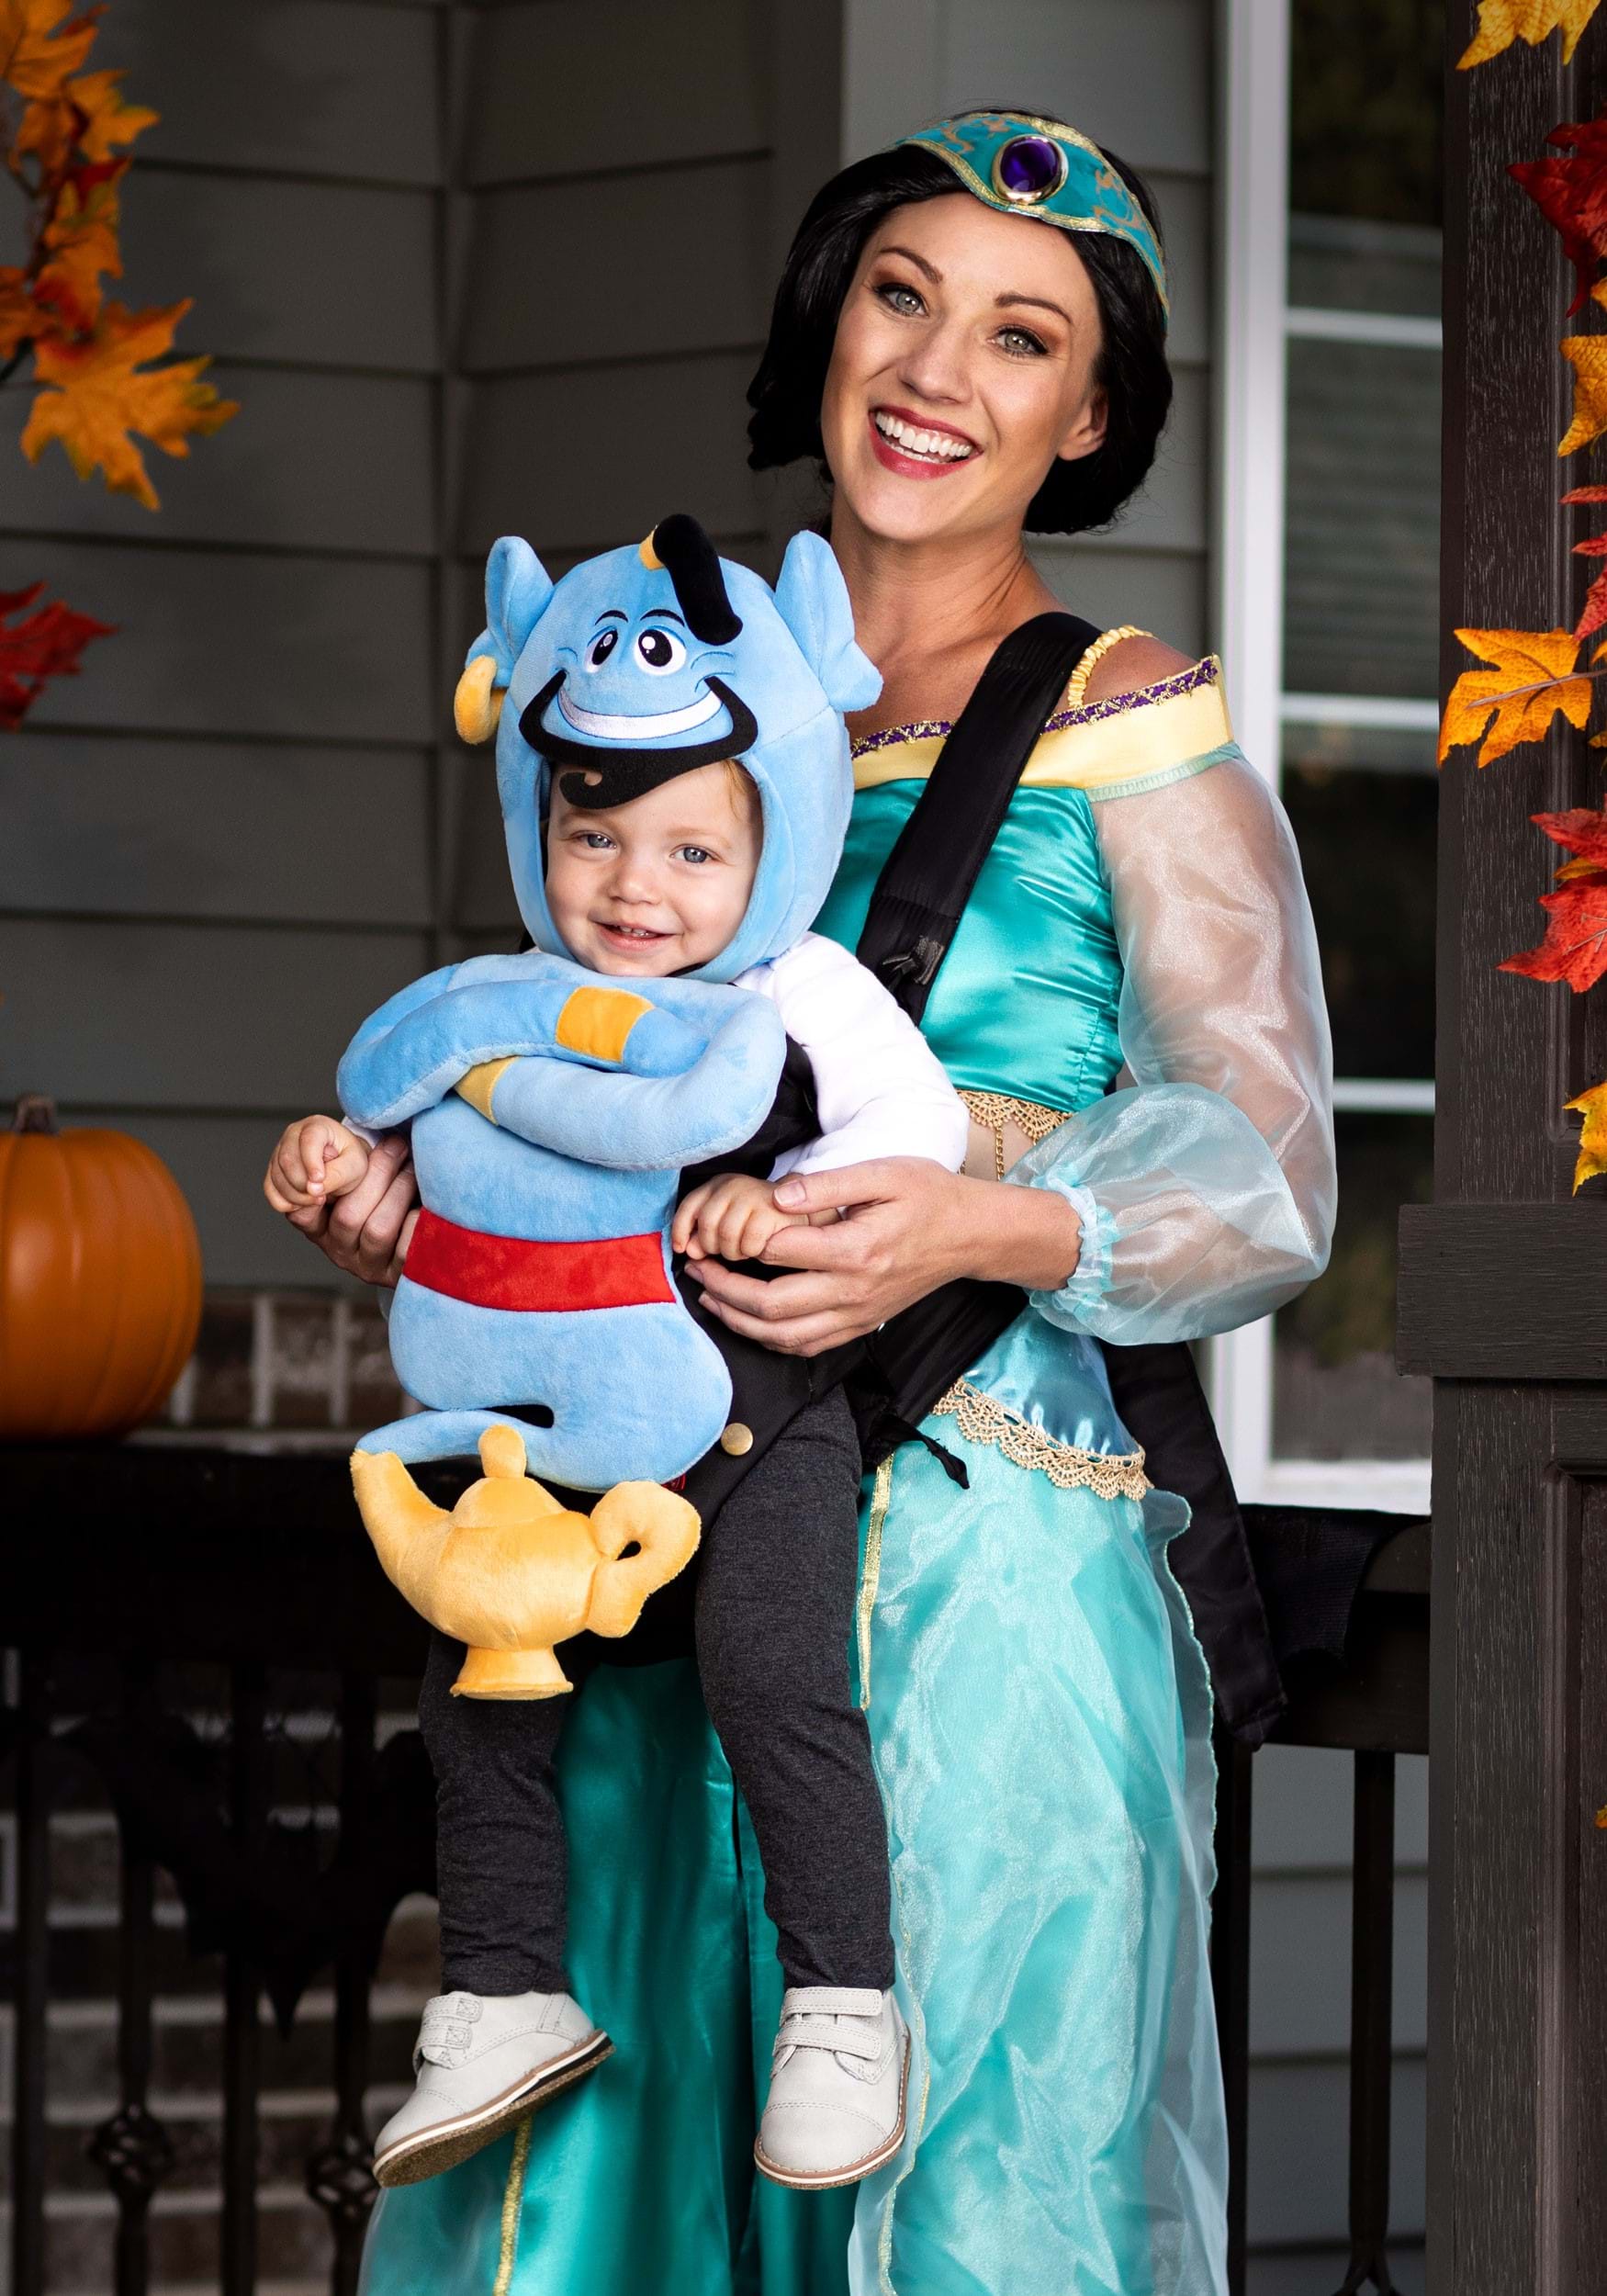 Womens Disney Aladdin Jasmine Deluxe Costume - Small - Blue